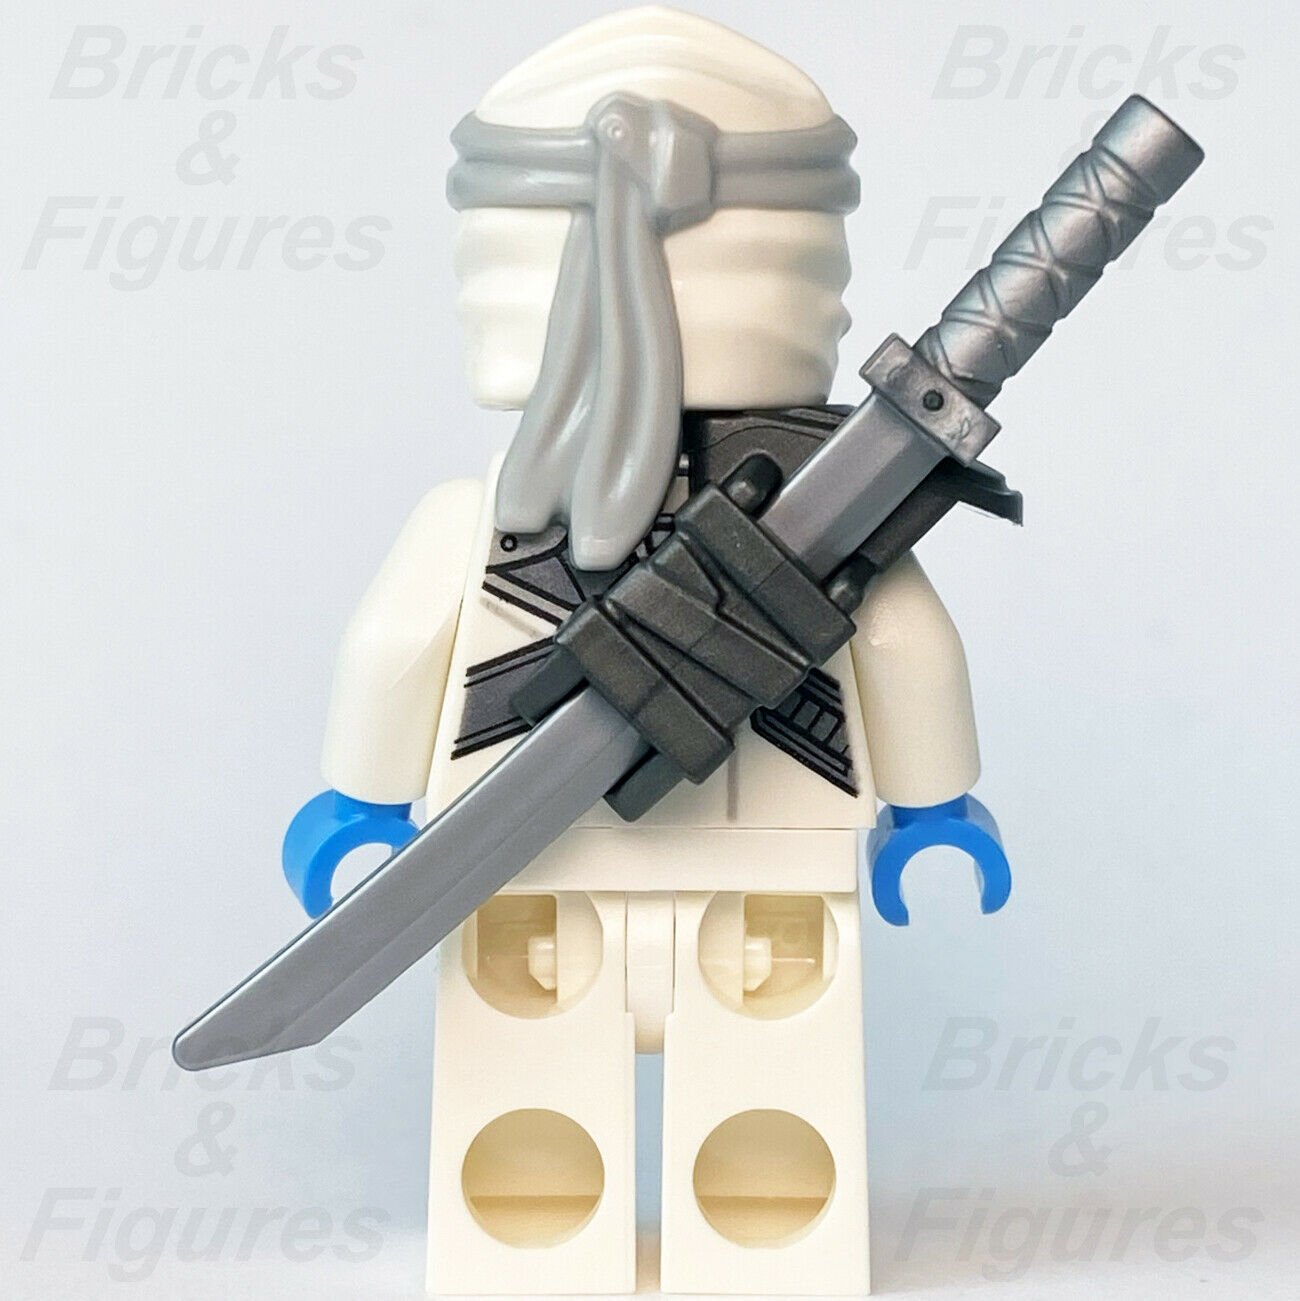 Ninjago LEGO Zane Ice Ninja Secrets of the Forbidden Spinjitsu Book Minifigure - Bricks & Figures